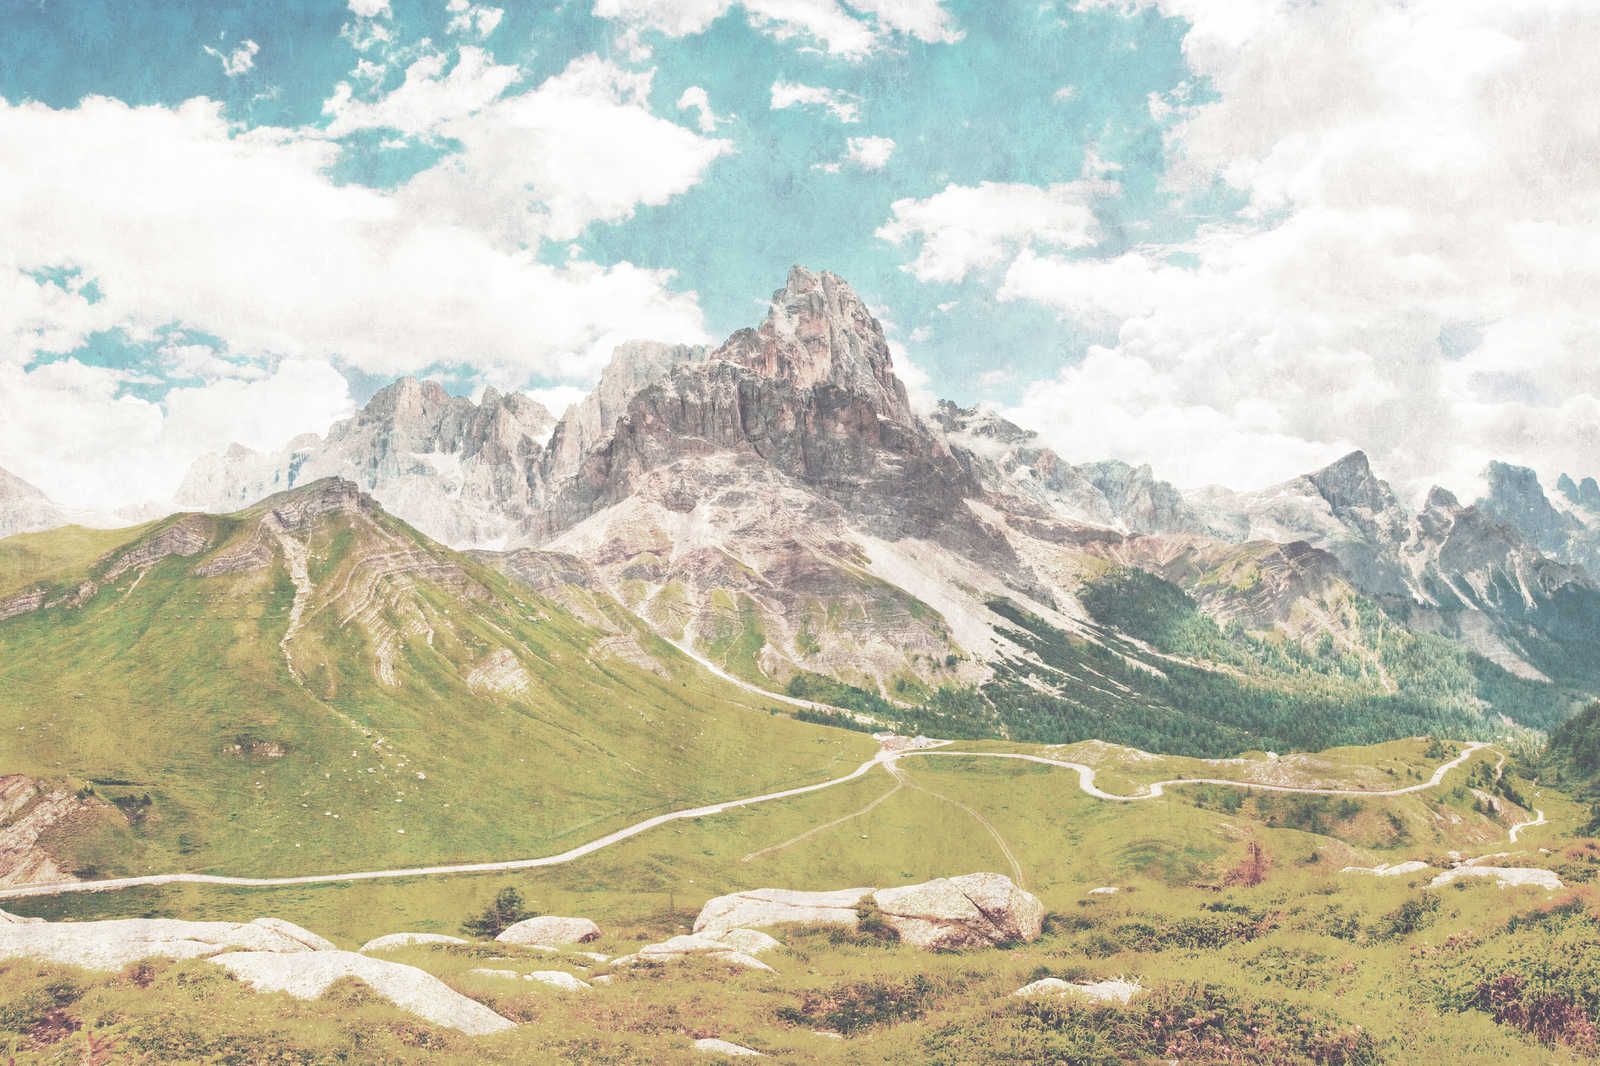             Dolomiti 2 - Leinwandbild Dolomiten Retro Fotografie – 1,20 m x 0,80 m
        